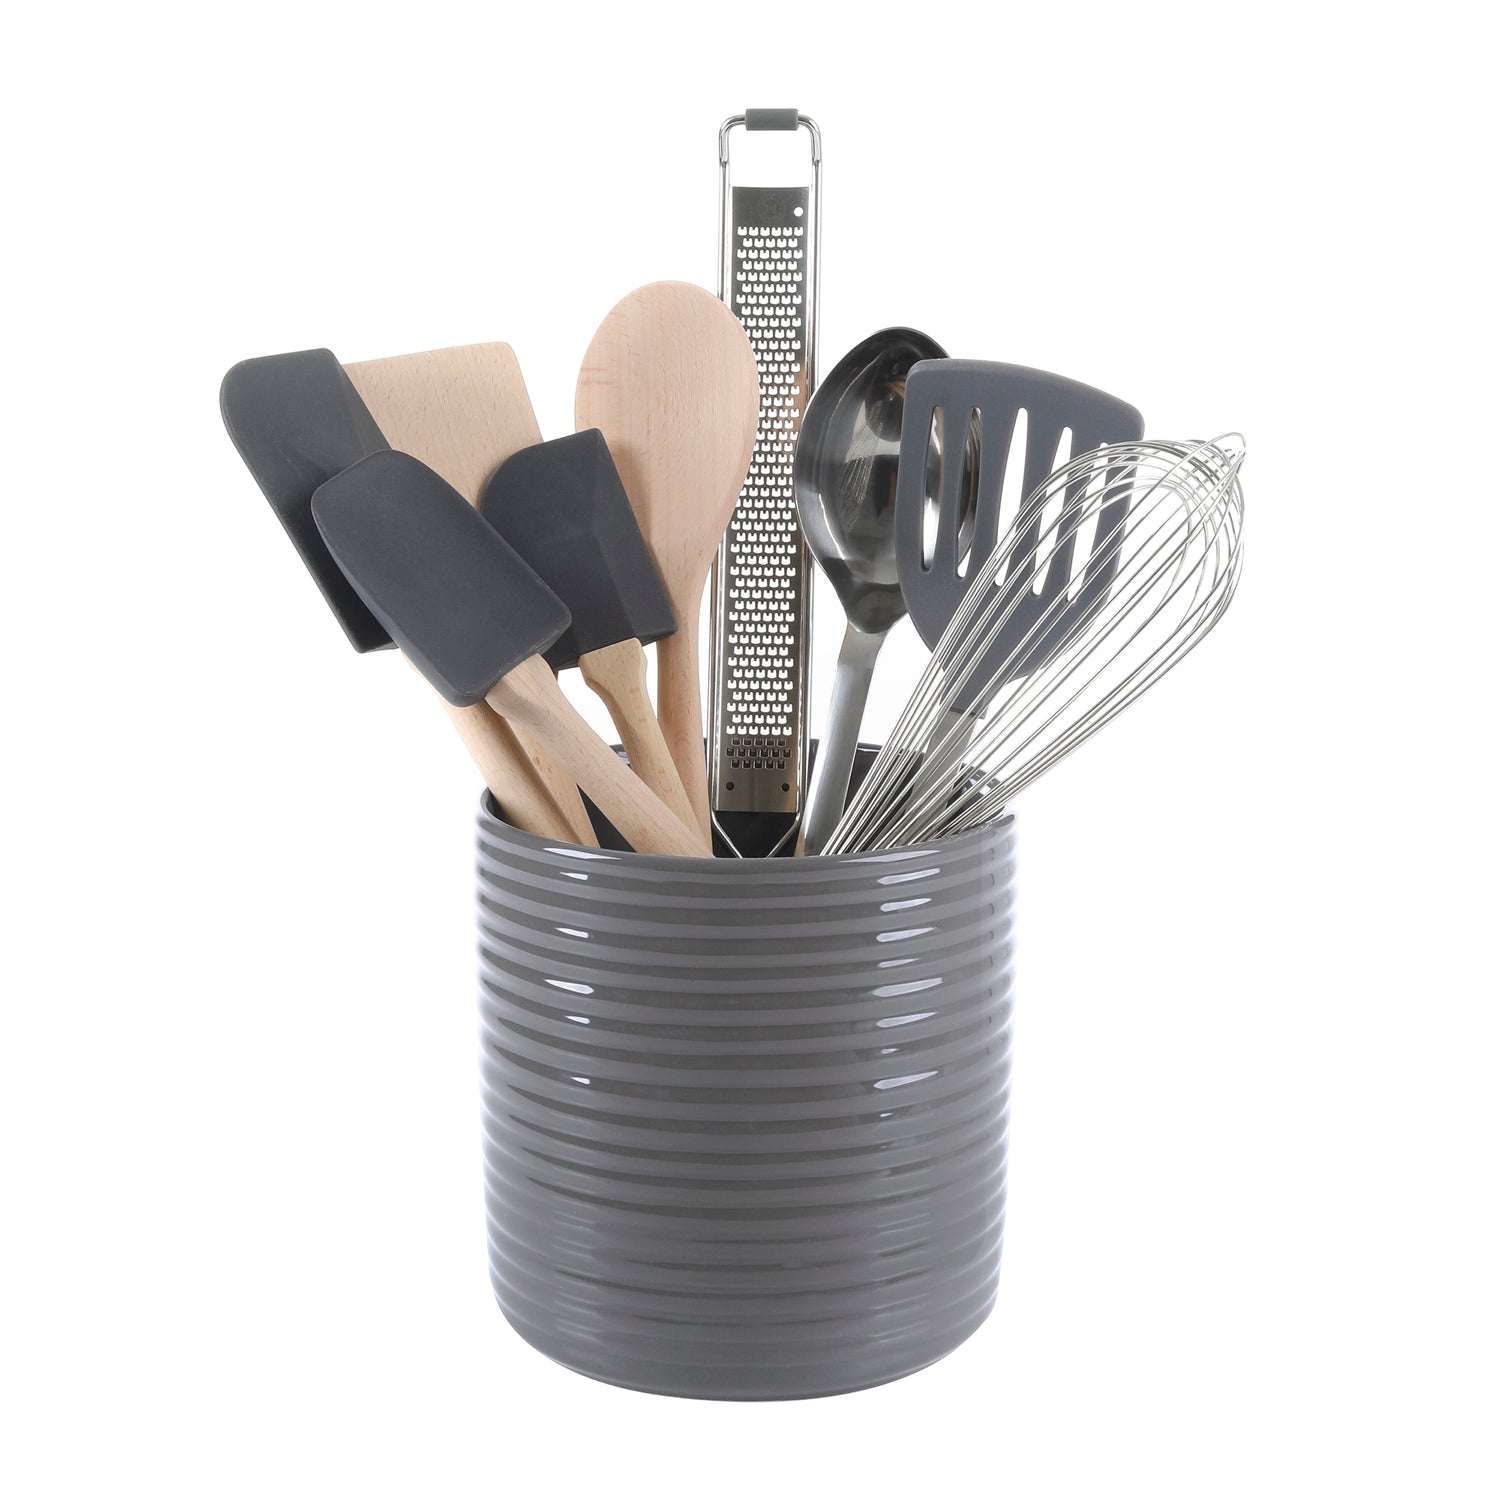 Martha Stewart 10-Piece Tools and Gadget Set w/ Ceramic Crock